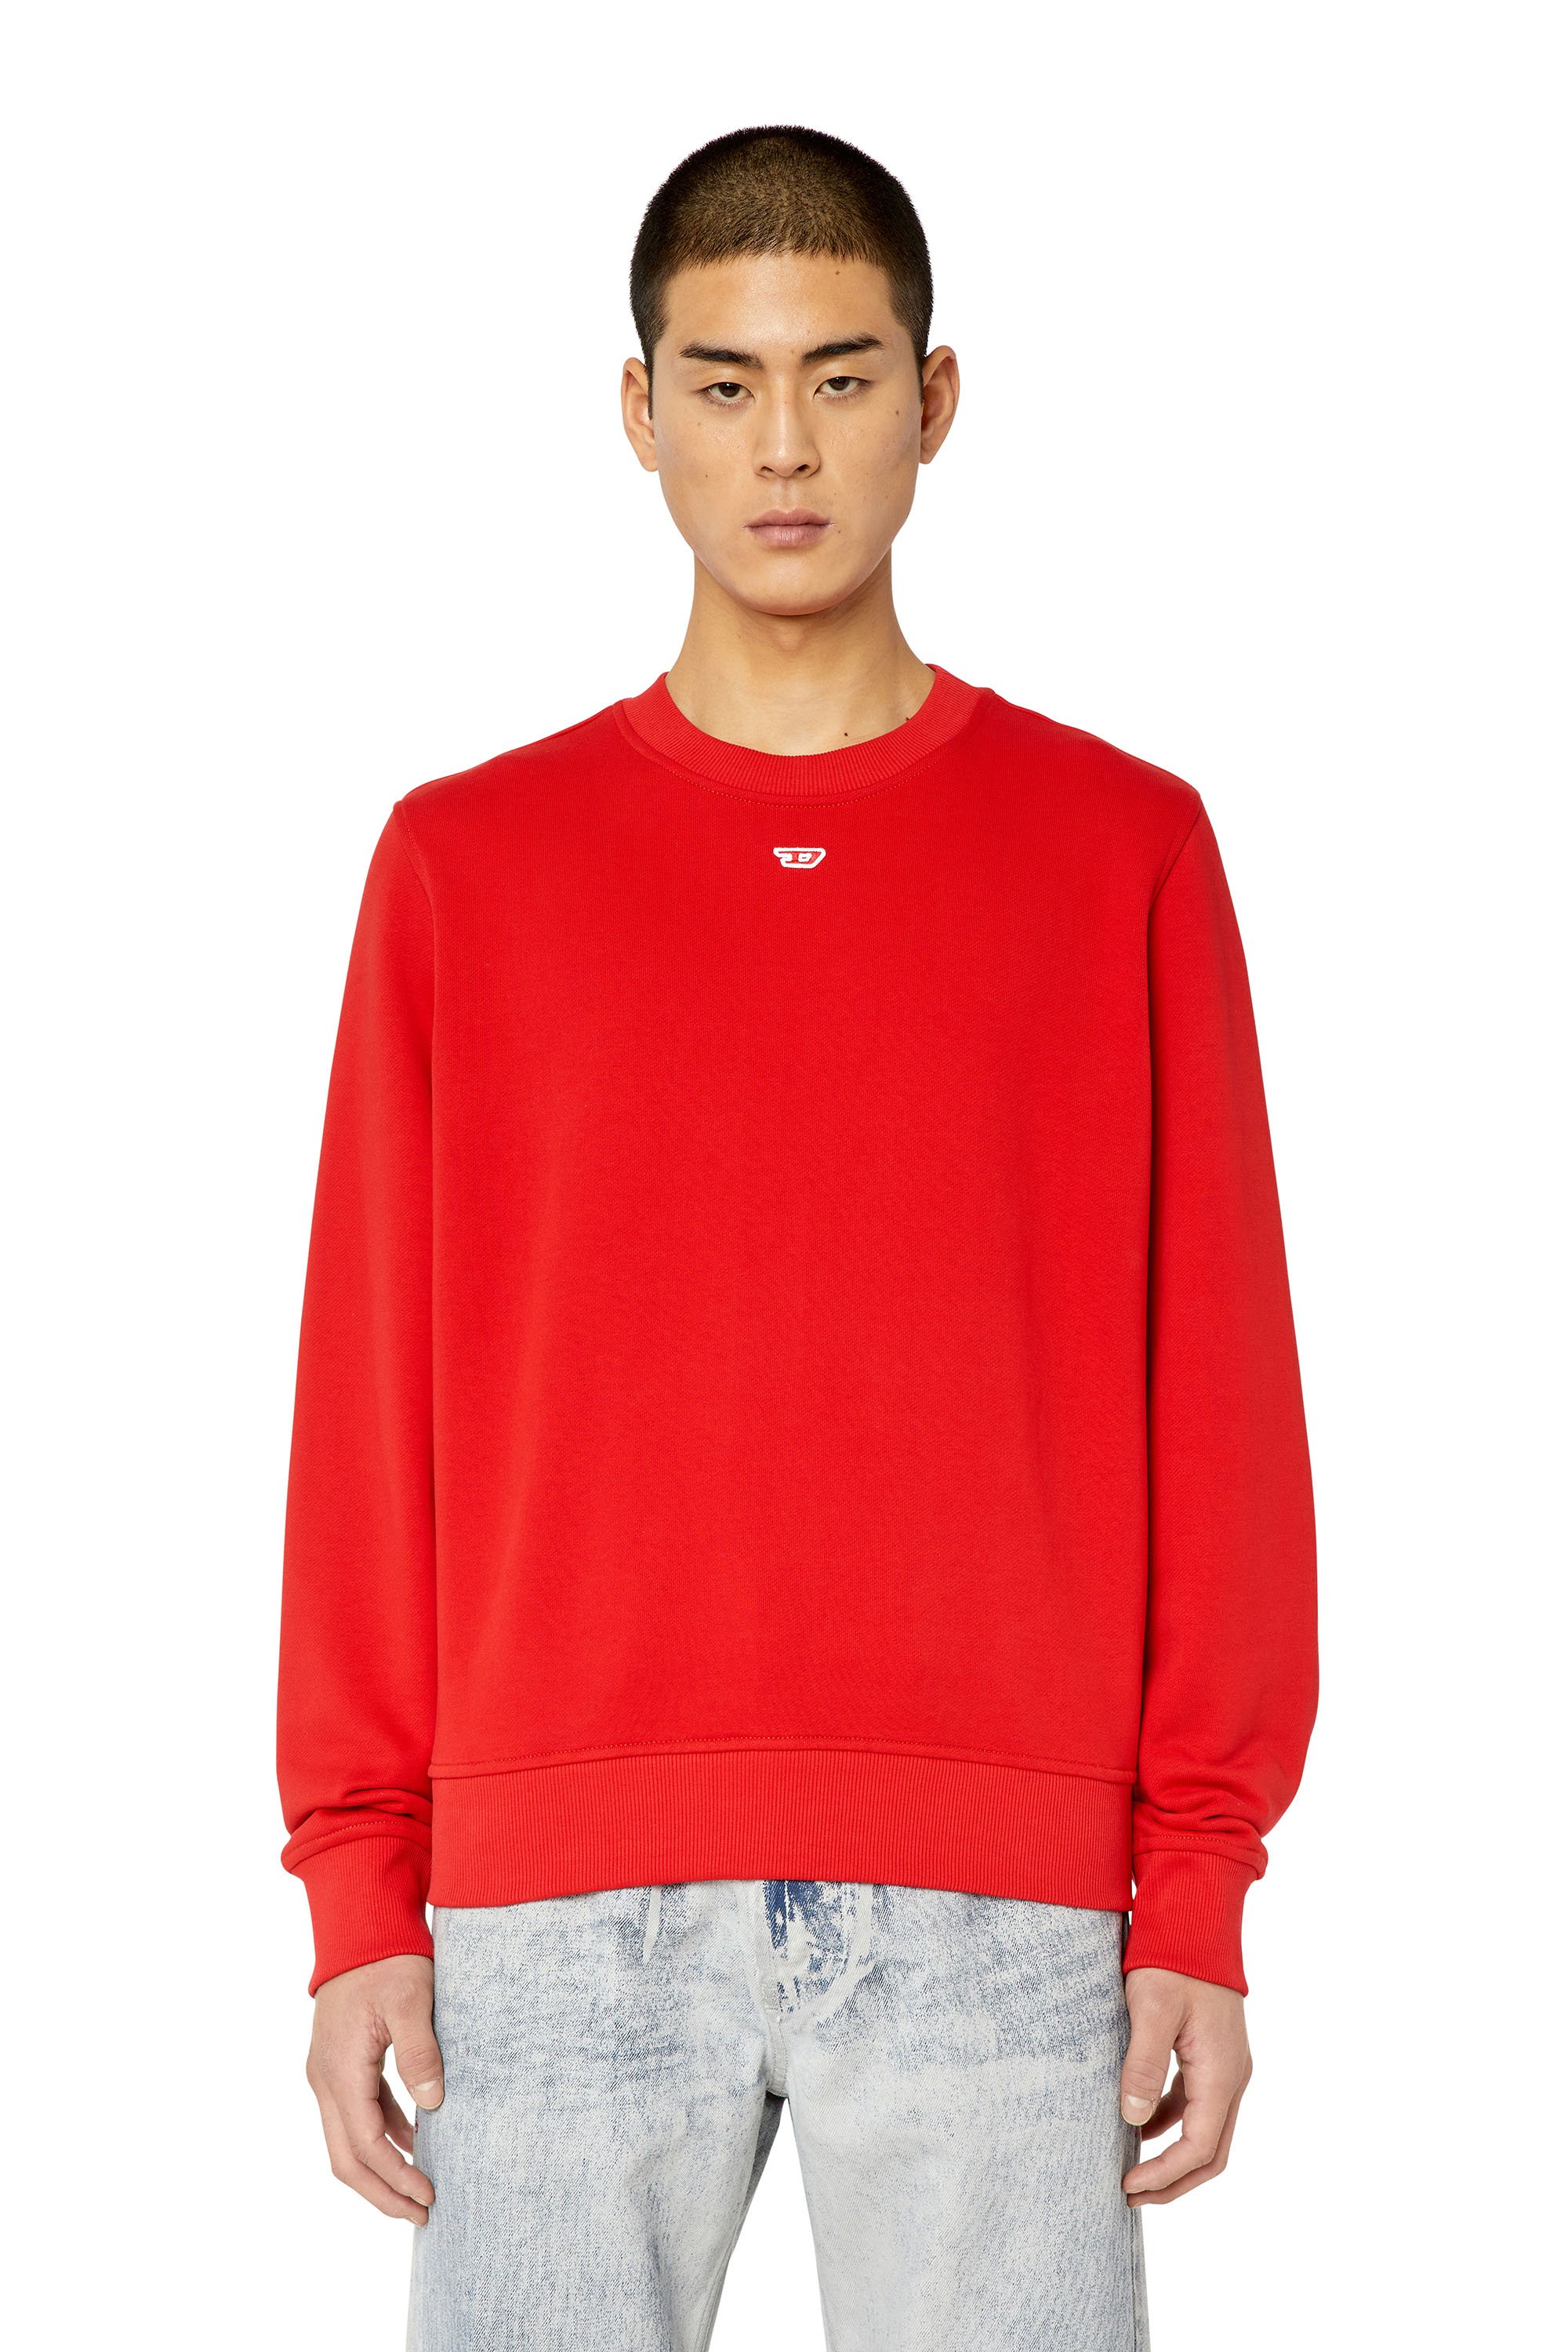 Diesel - Sweatshirt mit Mini-D-Patch - Sweatshirts - Unisex - Rot